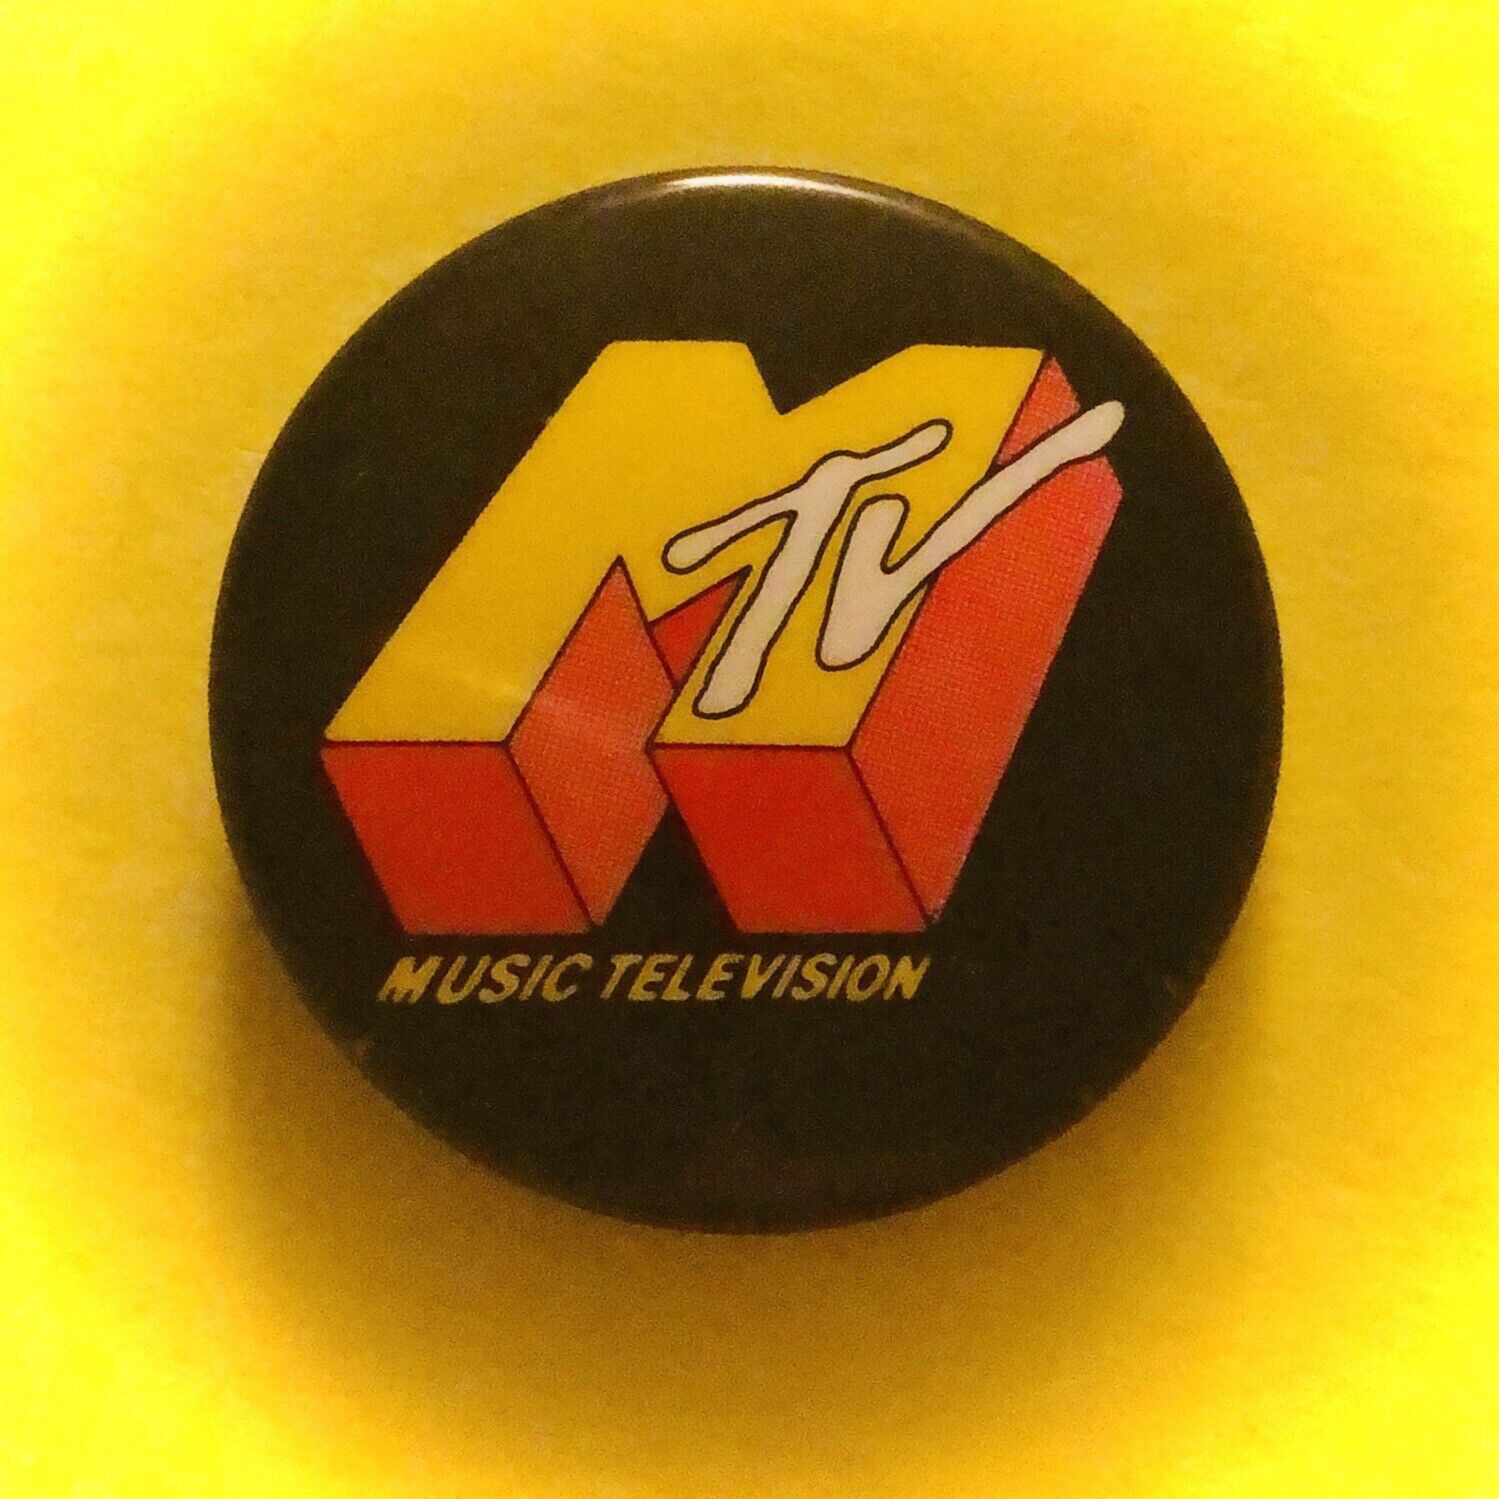 Vintage Authentic Original 1986  1.16” MTV Music Television pin pinback button